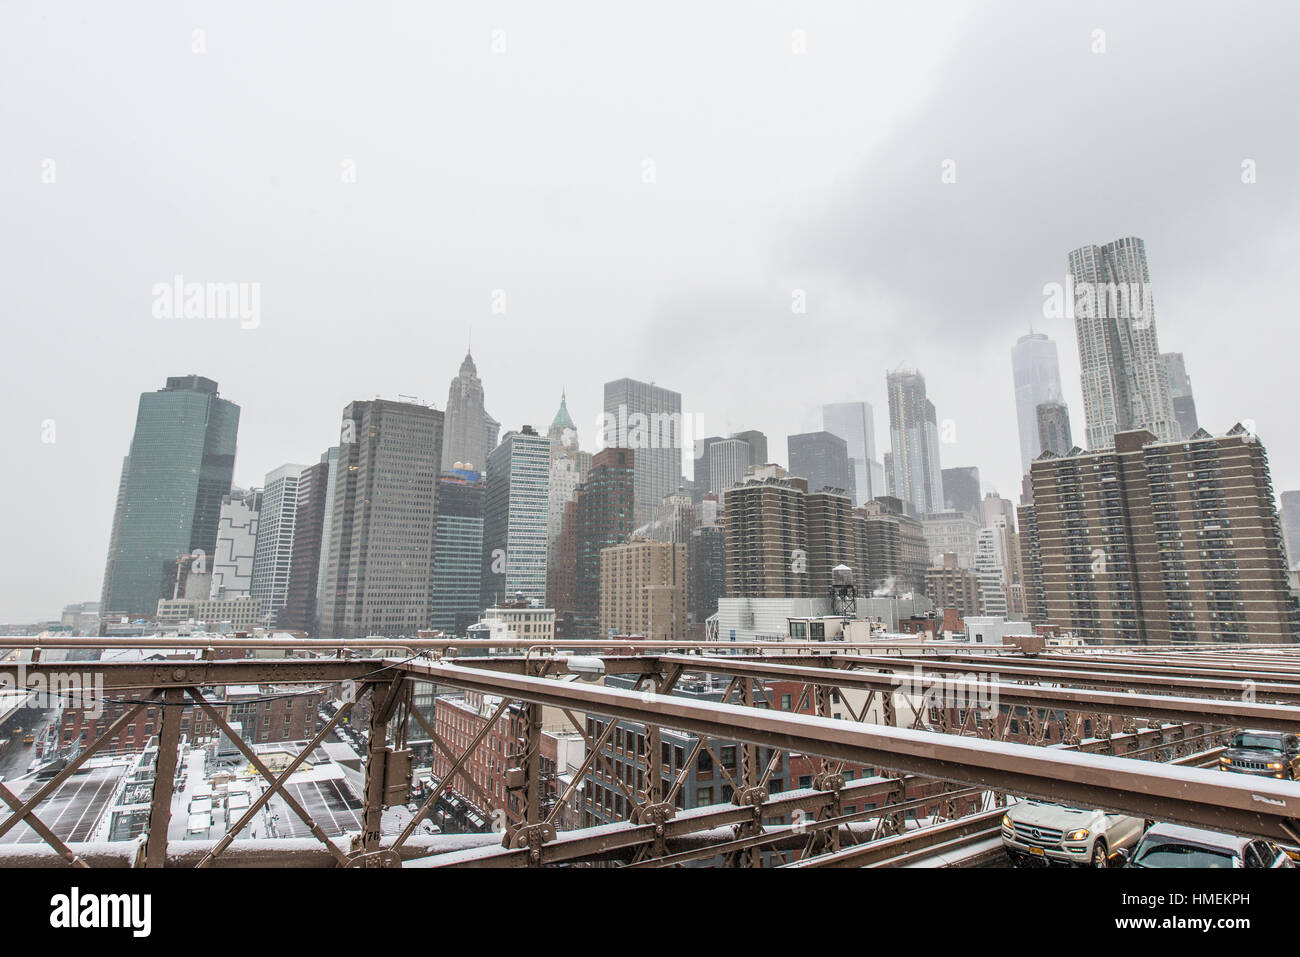 Brooklyn bridge pathway in winter Stock Photo